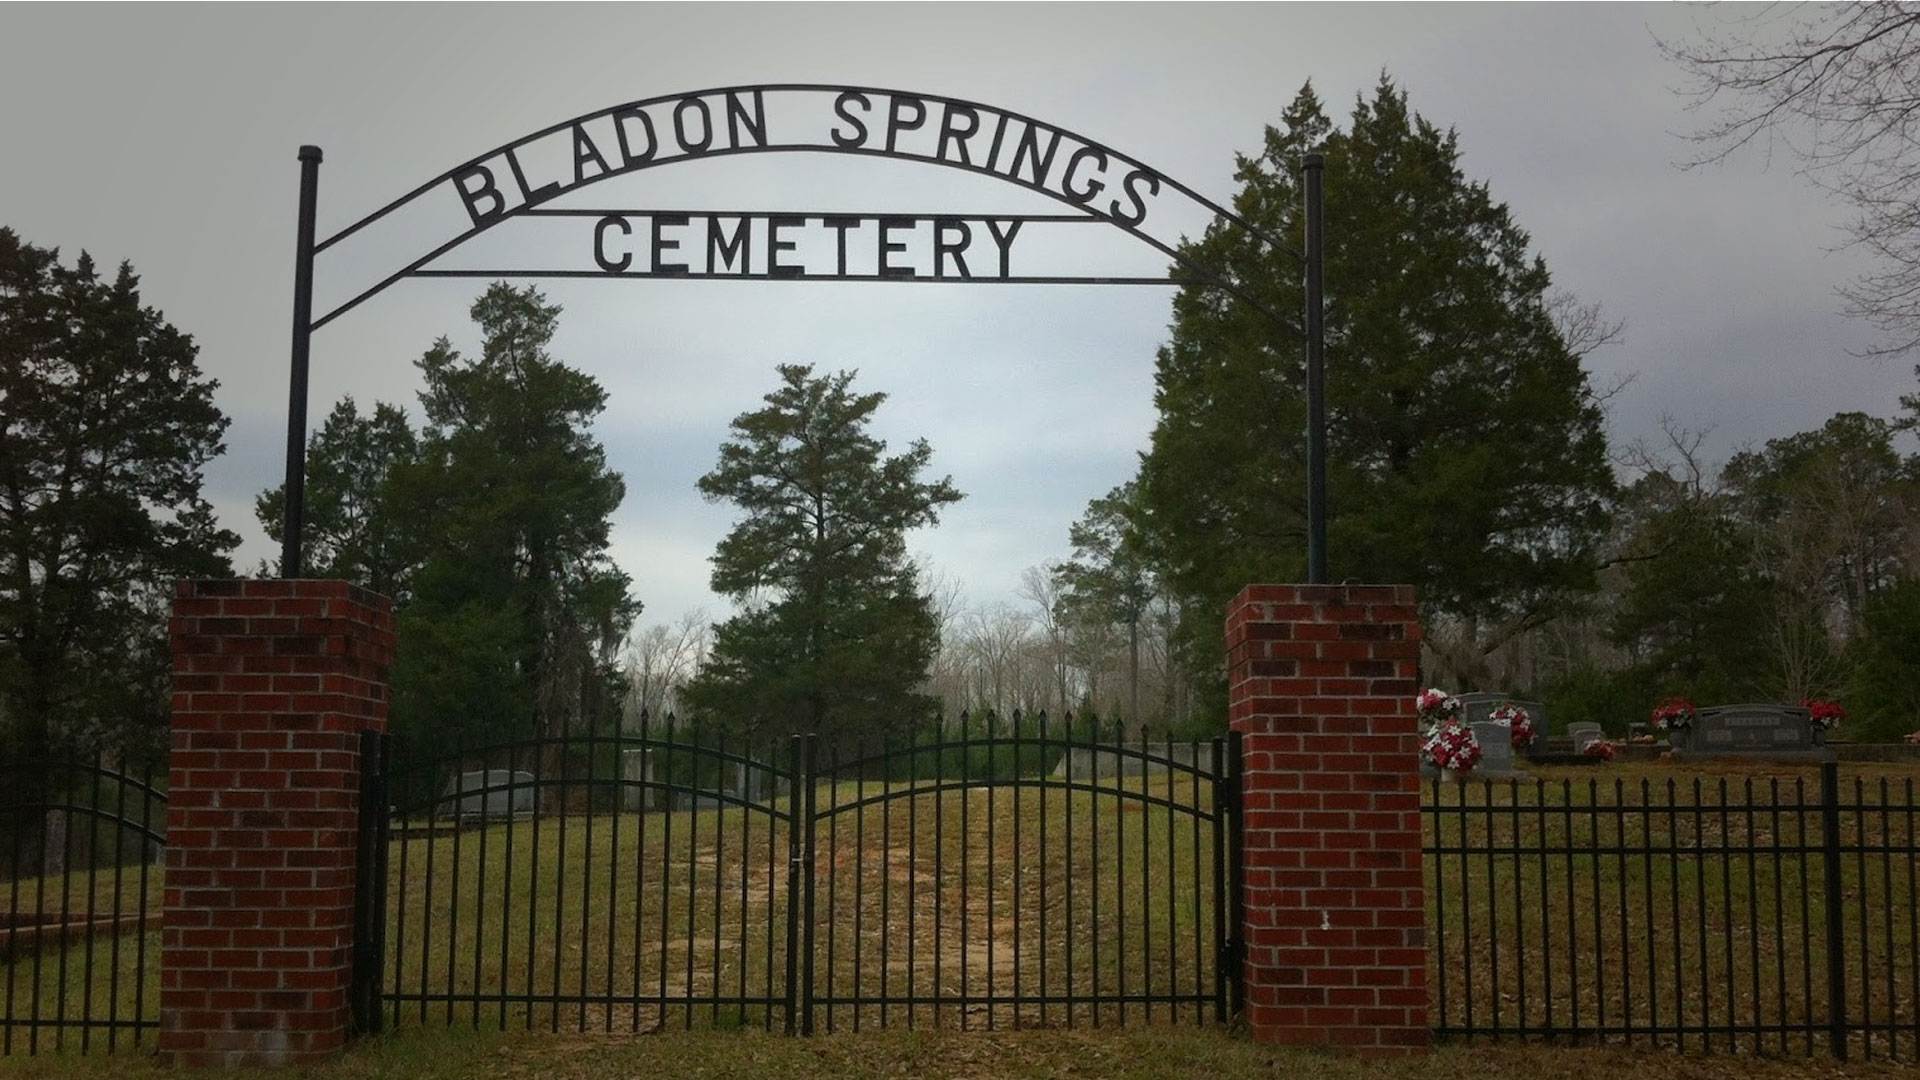 Bladon Springs Cemetery in Bladon Springs, Alabama